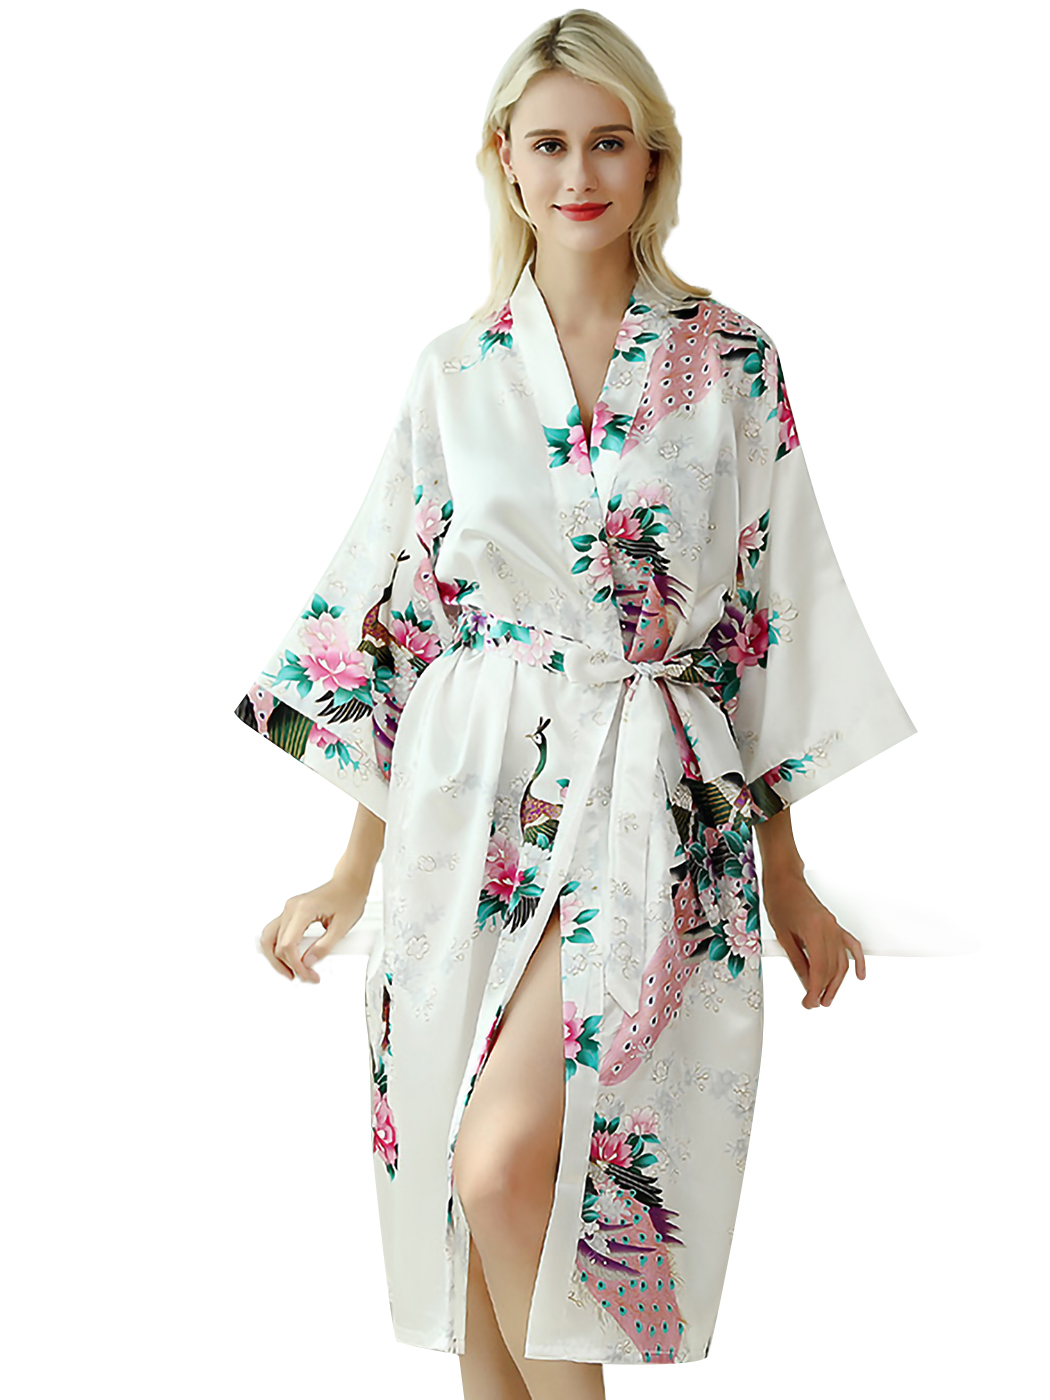 Women's Peacock Floral Satin Robe Kimono Silky Nightgown Sleepwear | eBay